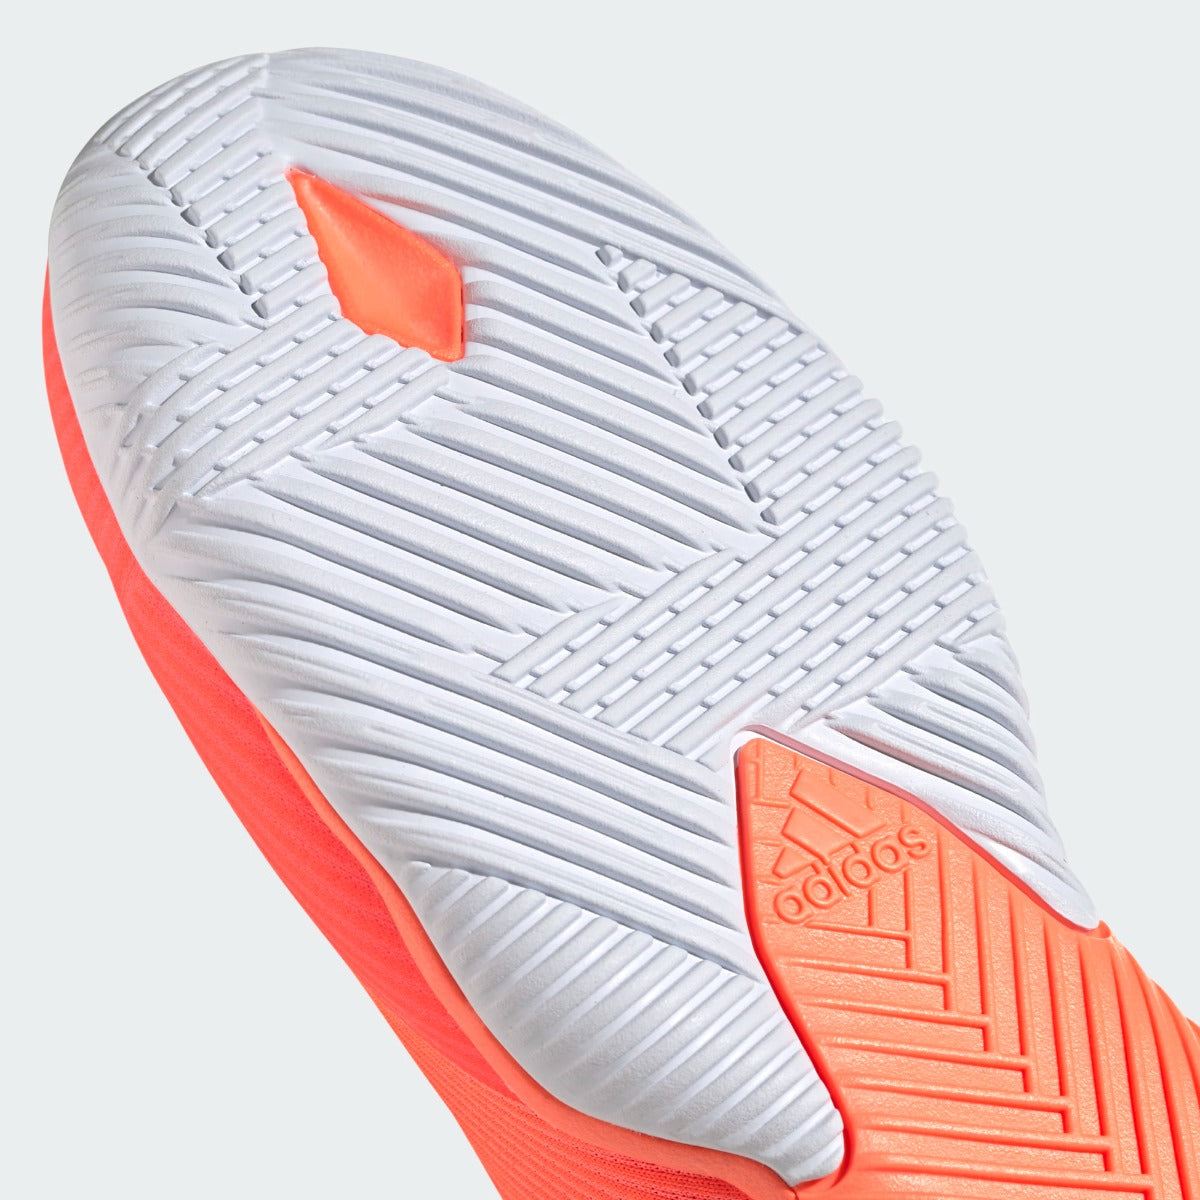 Adidas Nemeziz 19.3 IN - Signal Coral-Black